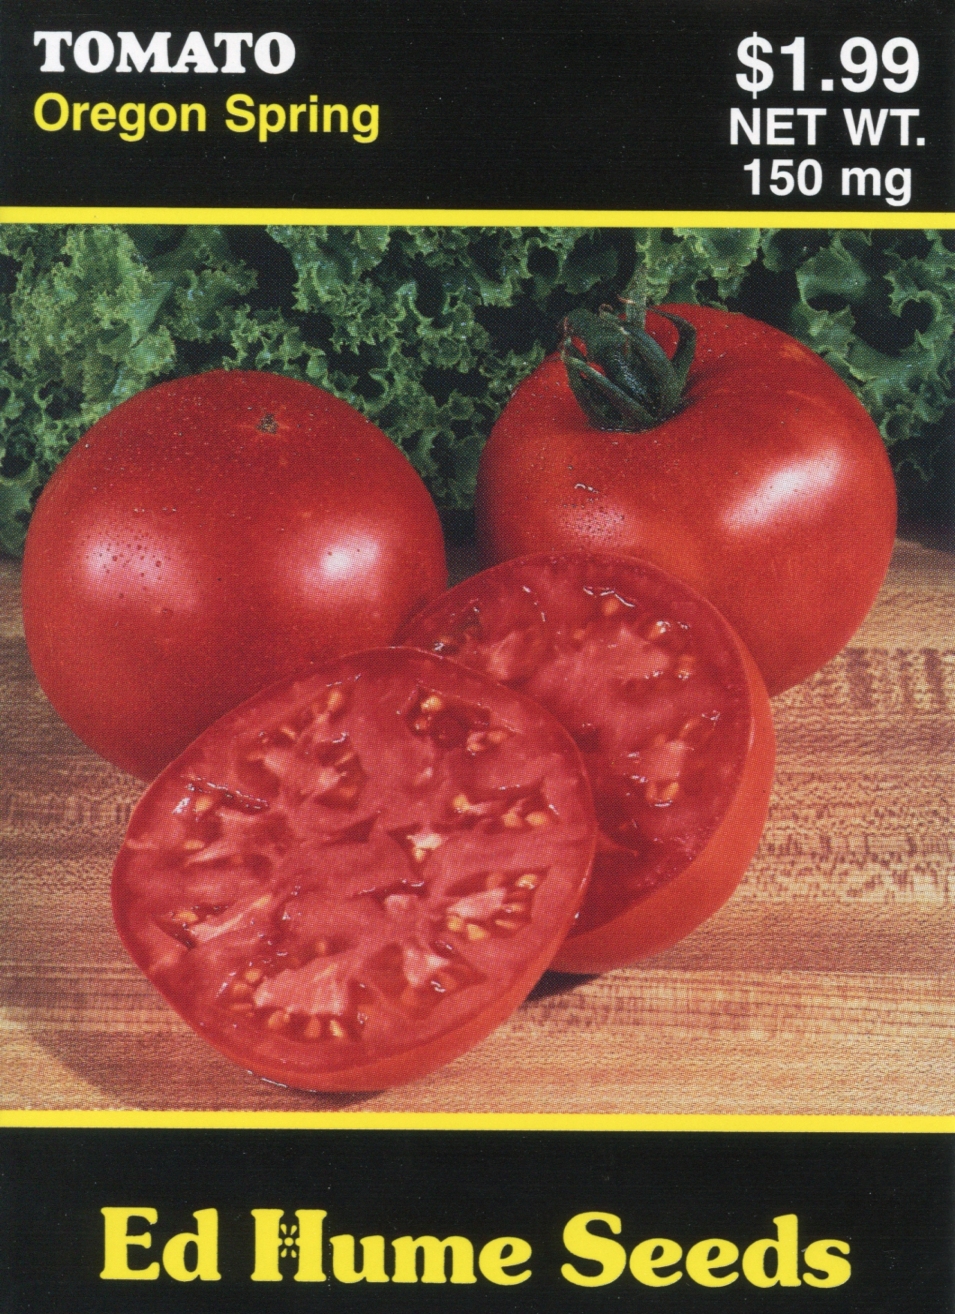 Tomato 'Oregon Star